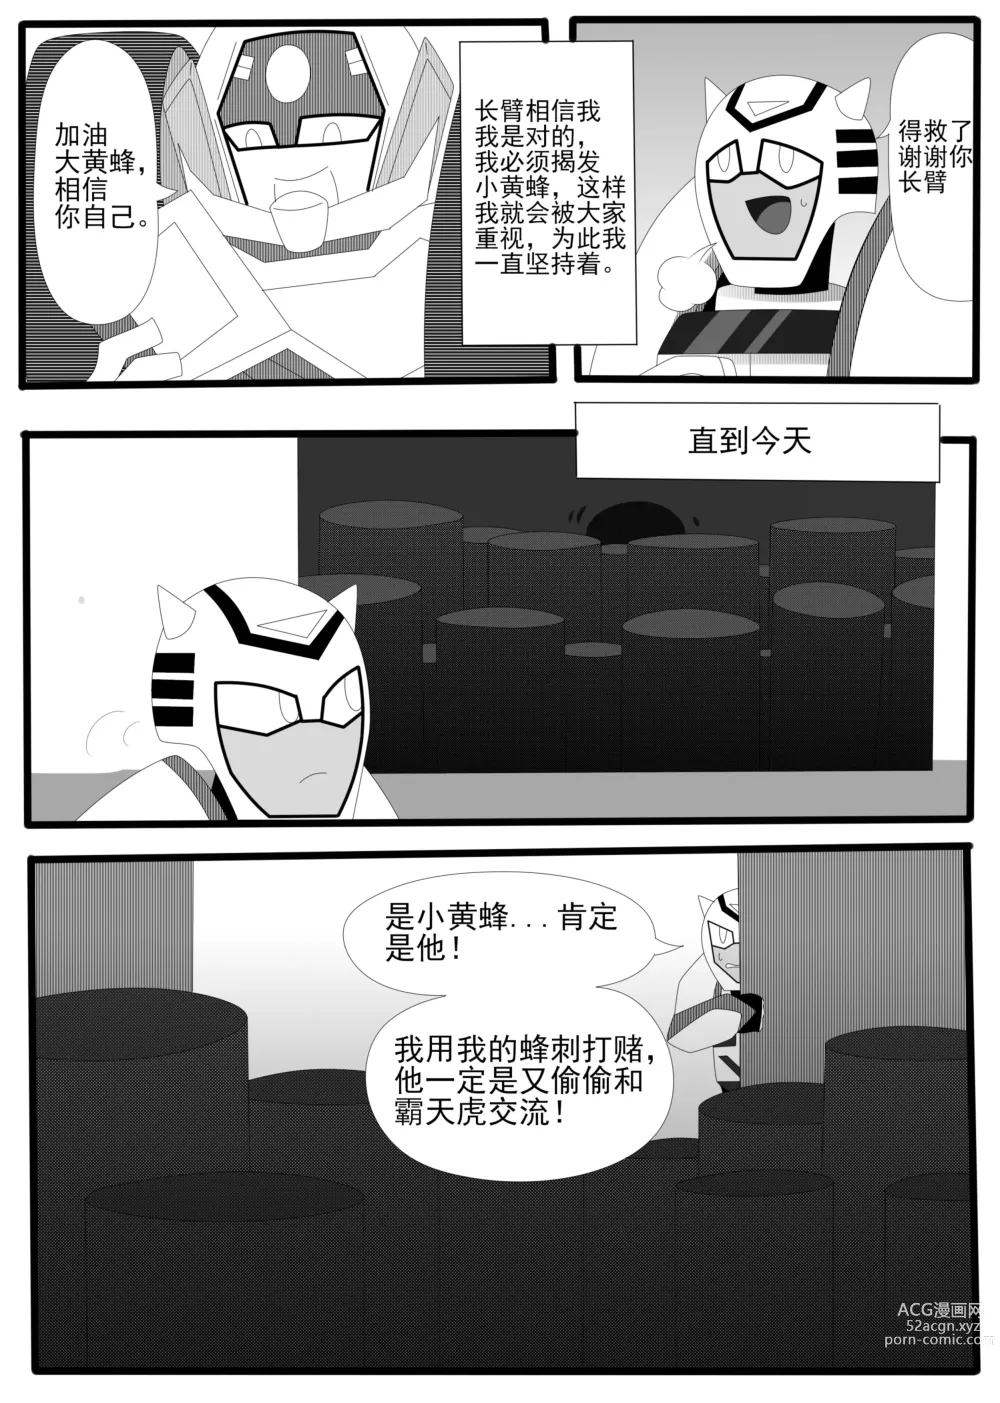 Page 4 of doujinshi Transformers animated doujinshi《MISUNDERSTAND》beewasp R-18